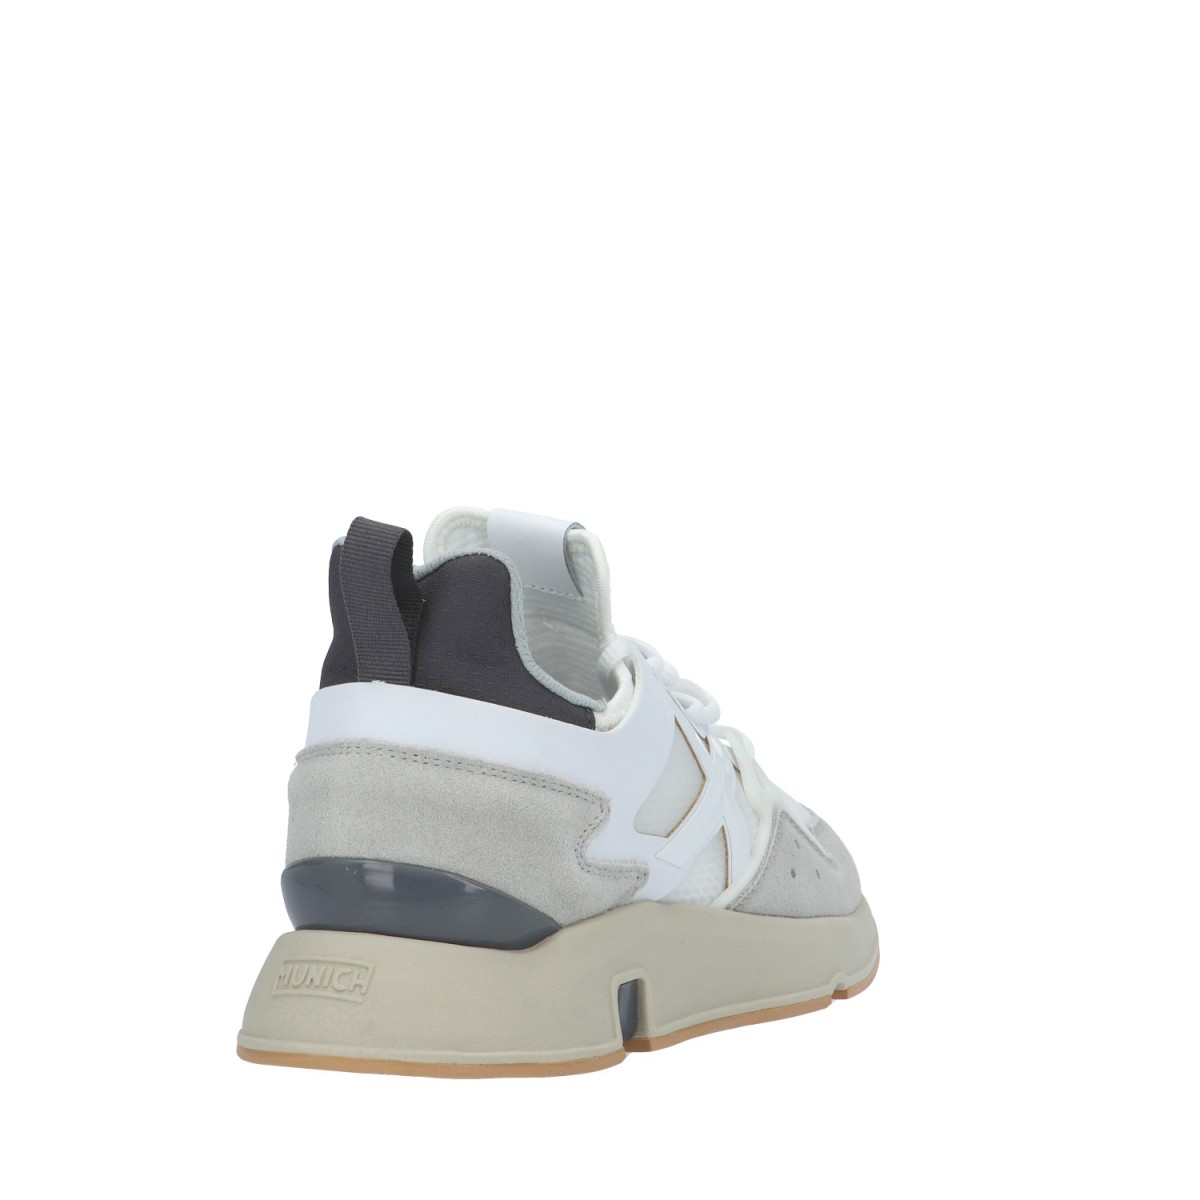 Munich Sneaker Bianco/grigio Gomma 4172064